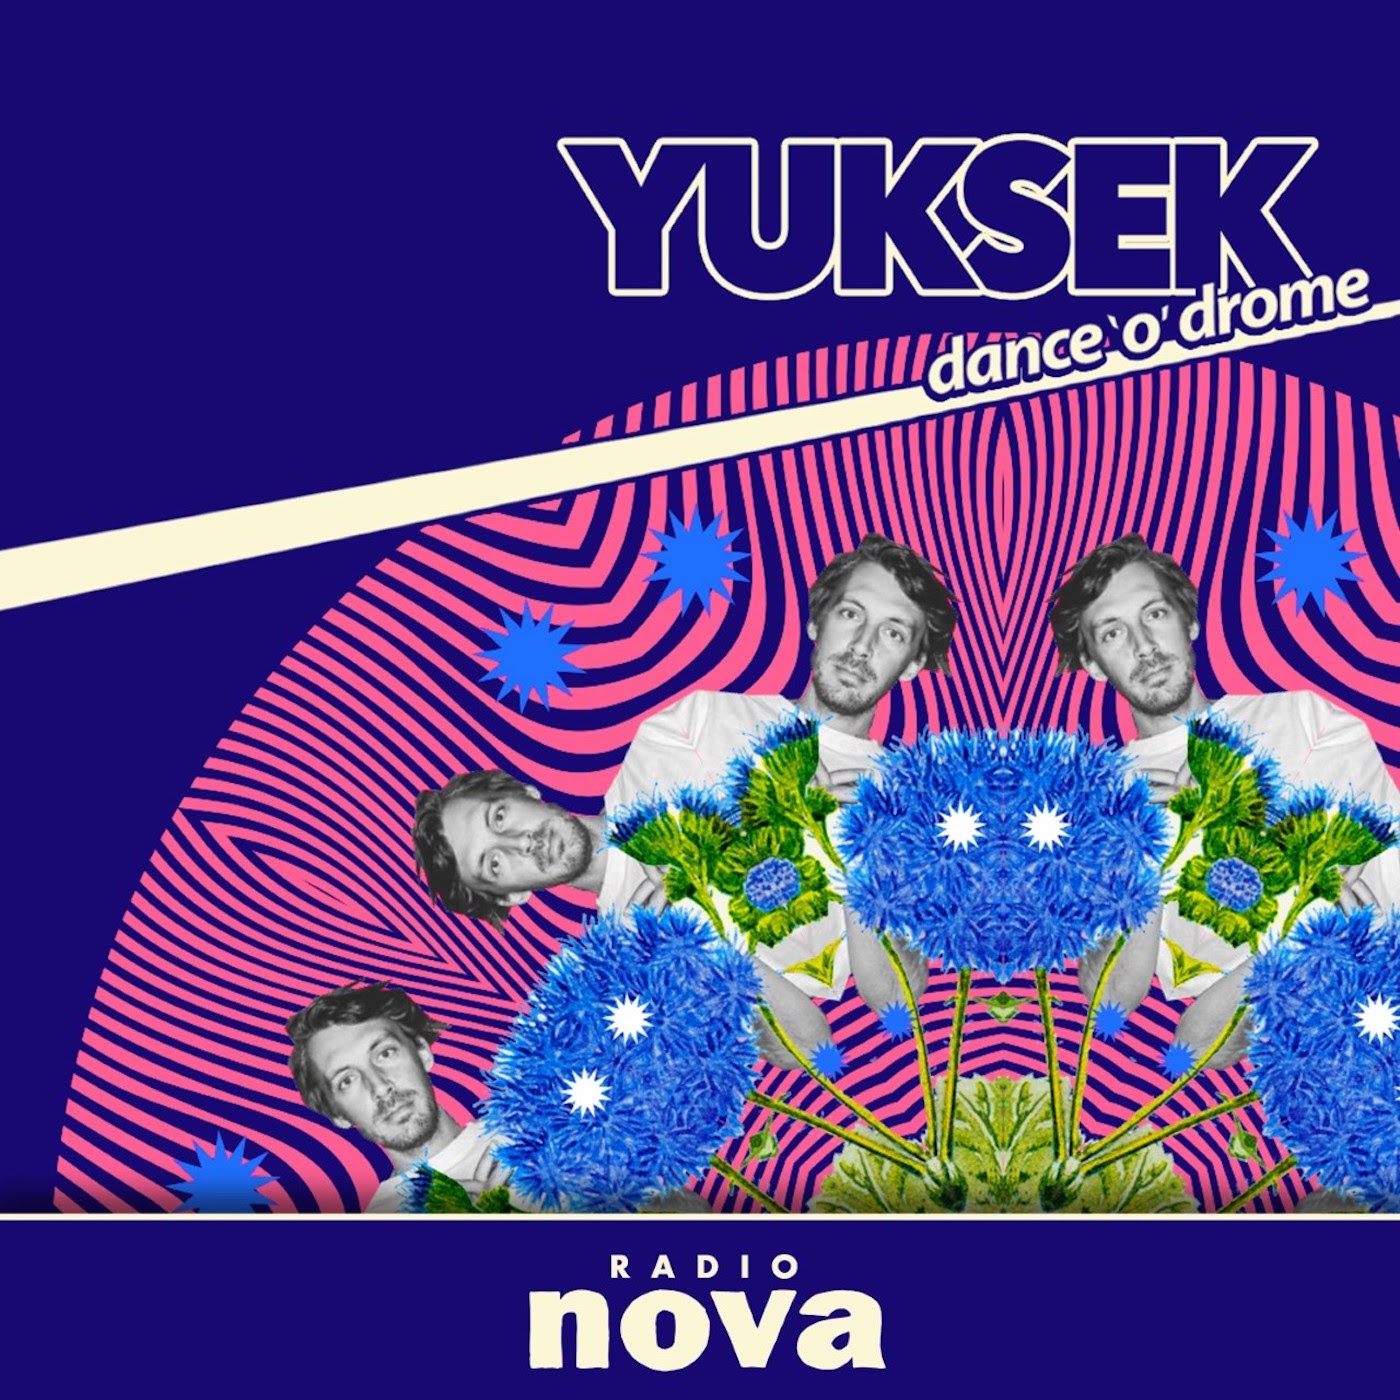 « Dance’o’drome » #26 : le mix de Yuksek, avec Polocorp, sur Radio Nova